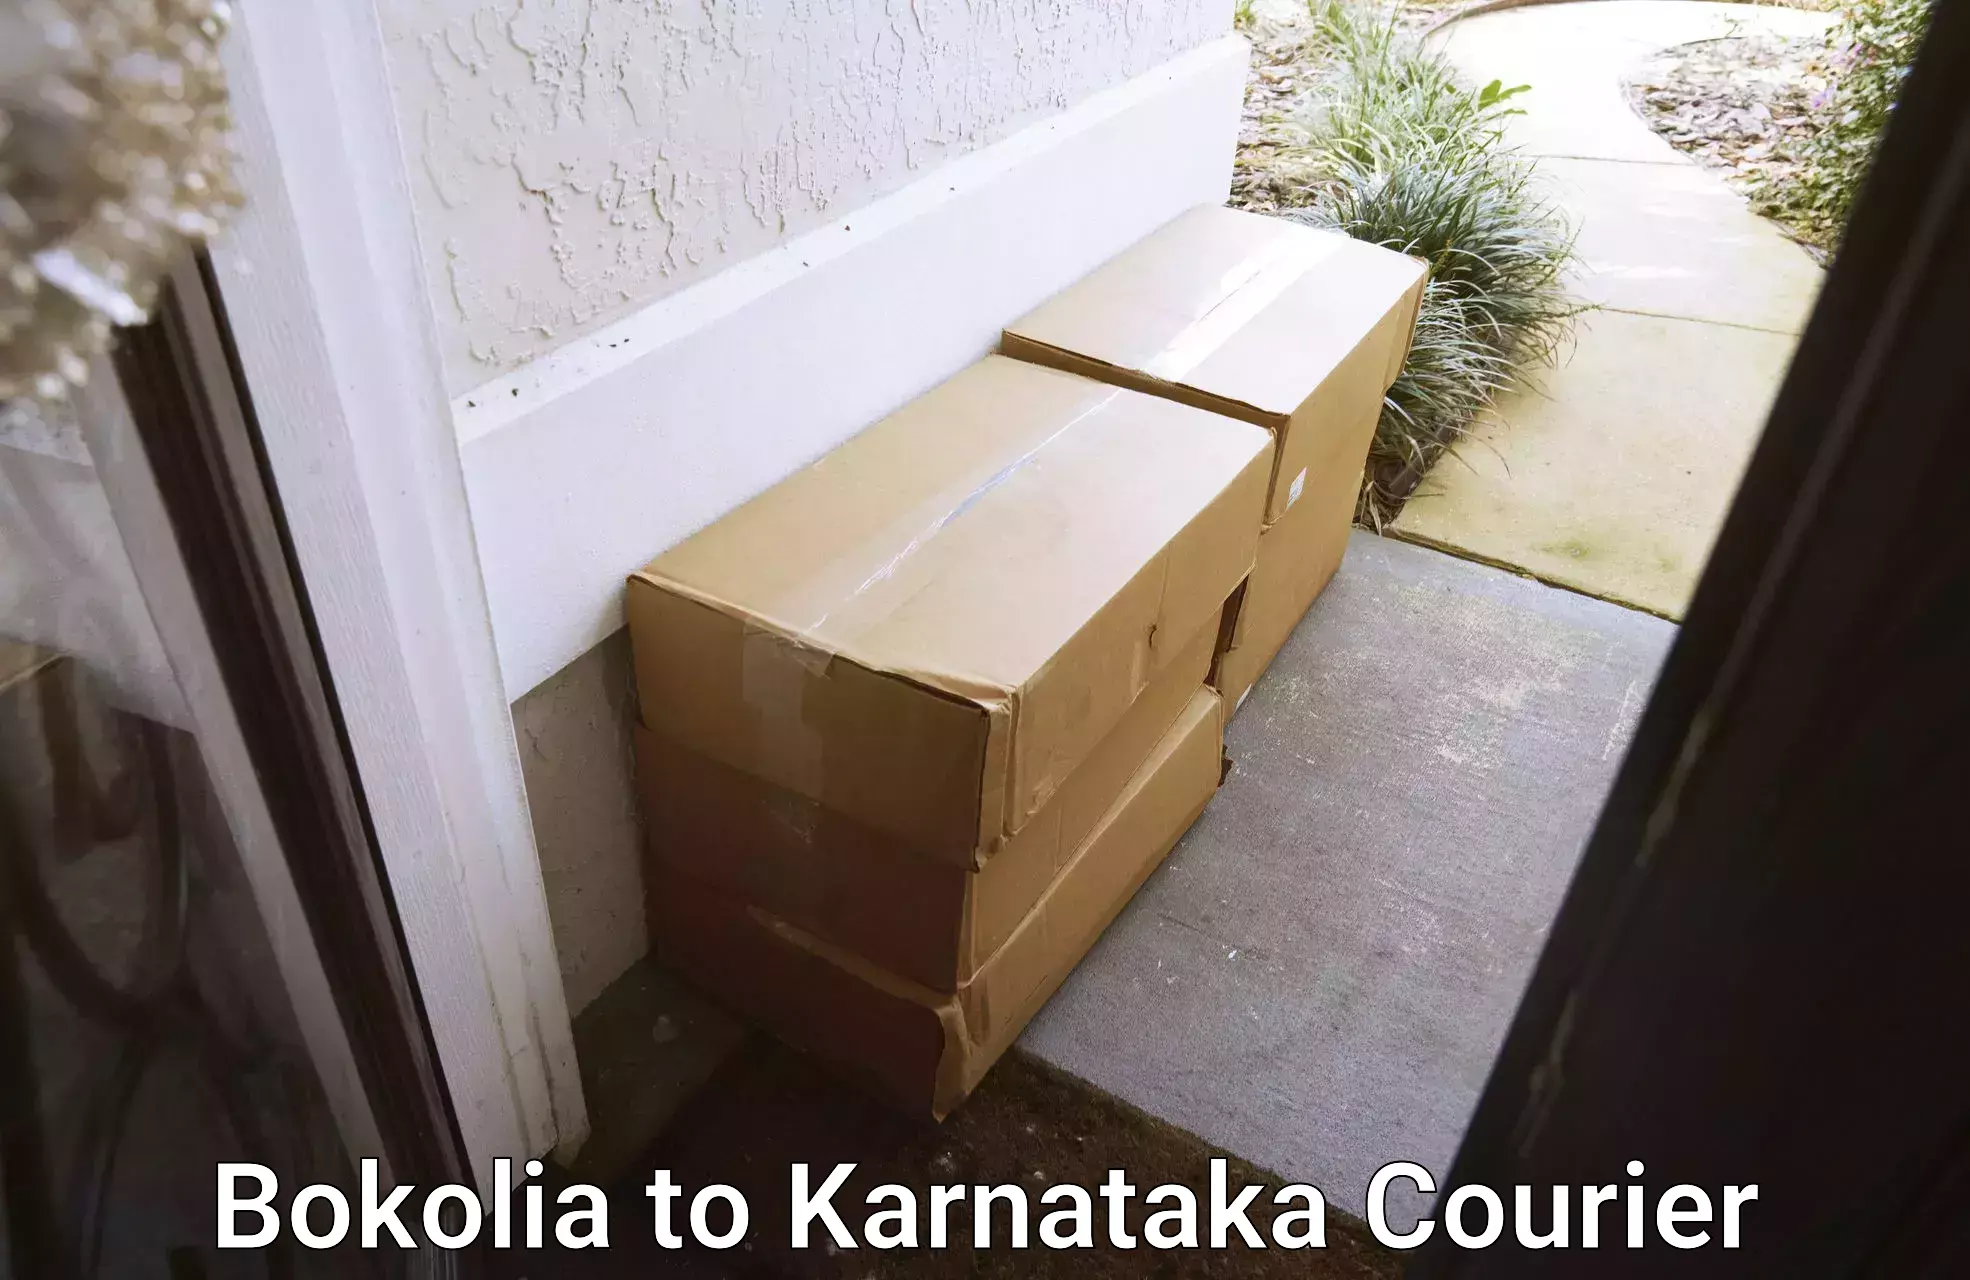 Small parcel delivery in Bokolia to Sagara